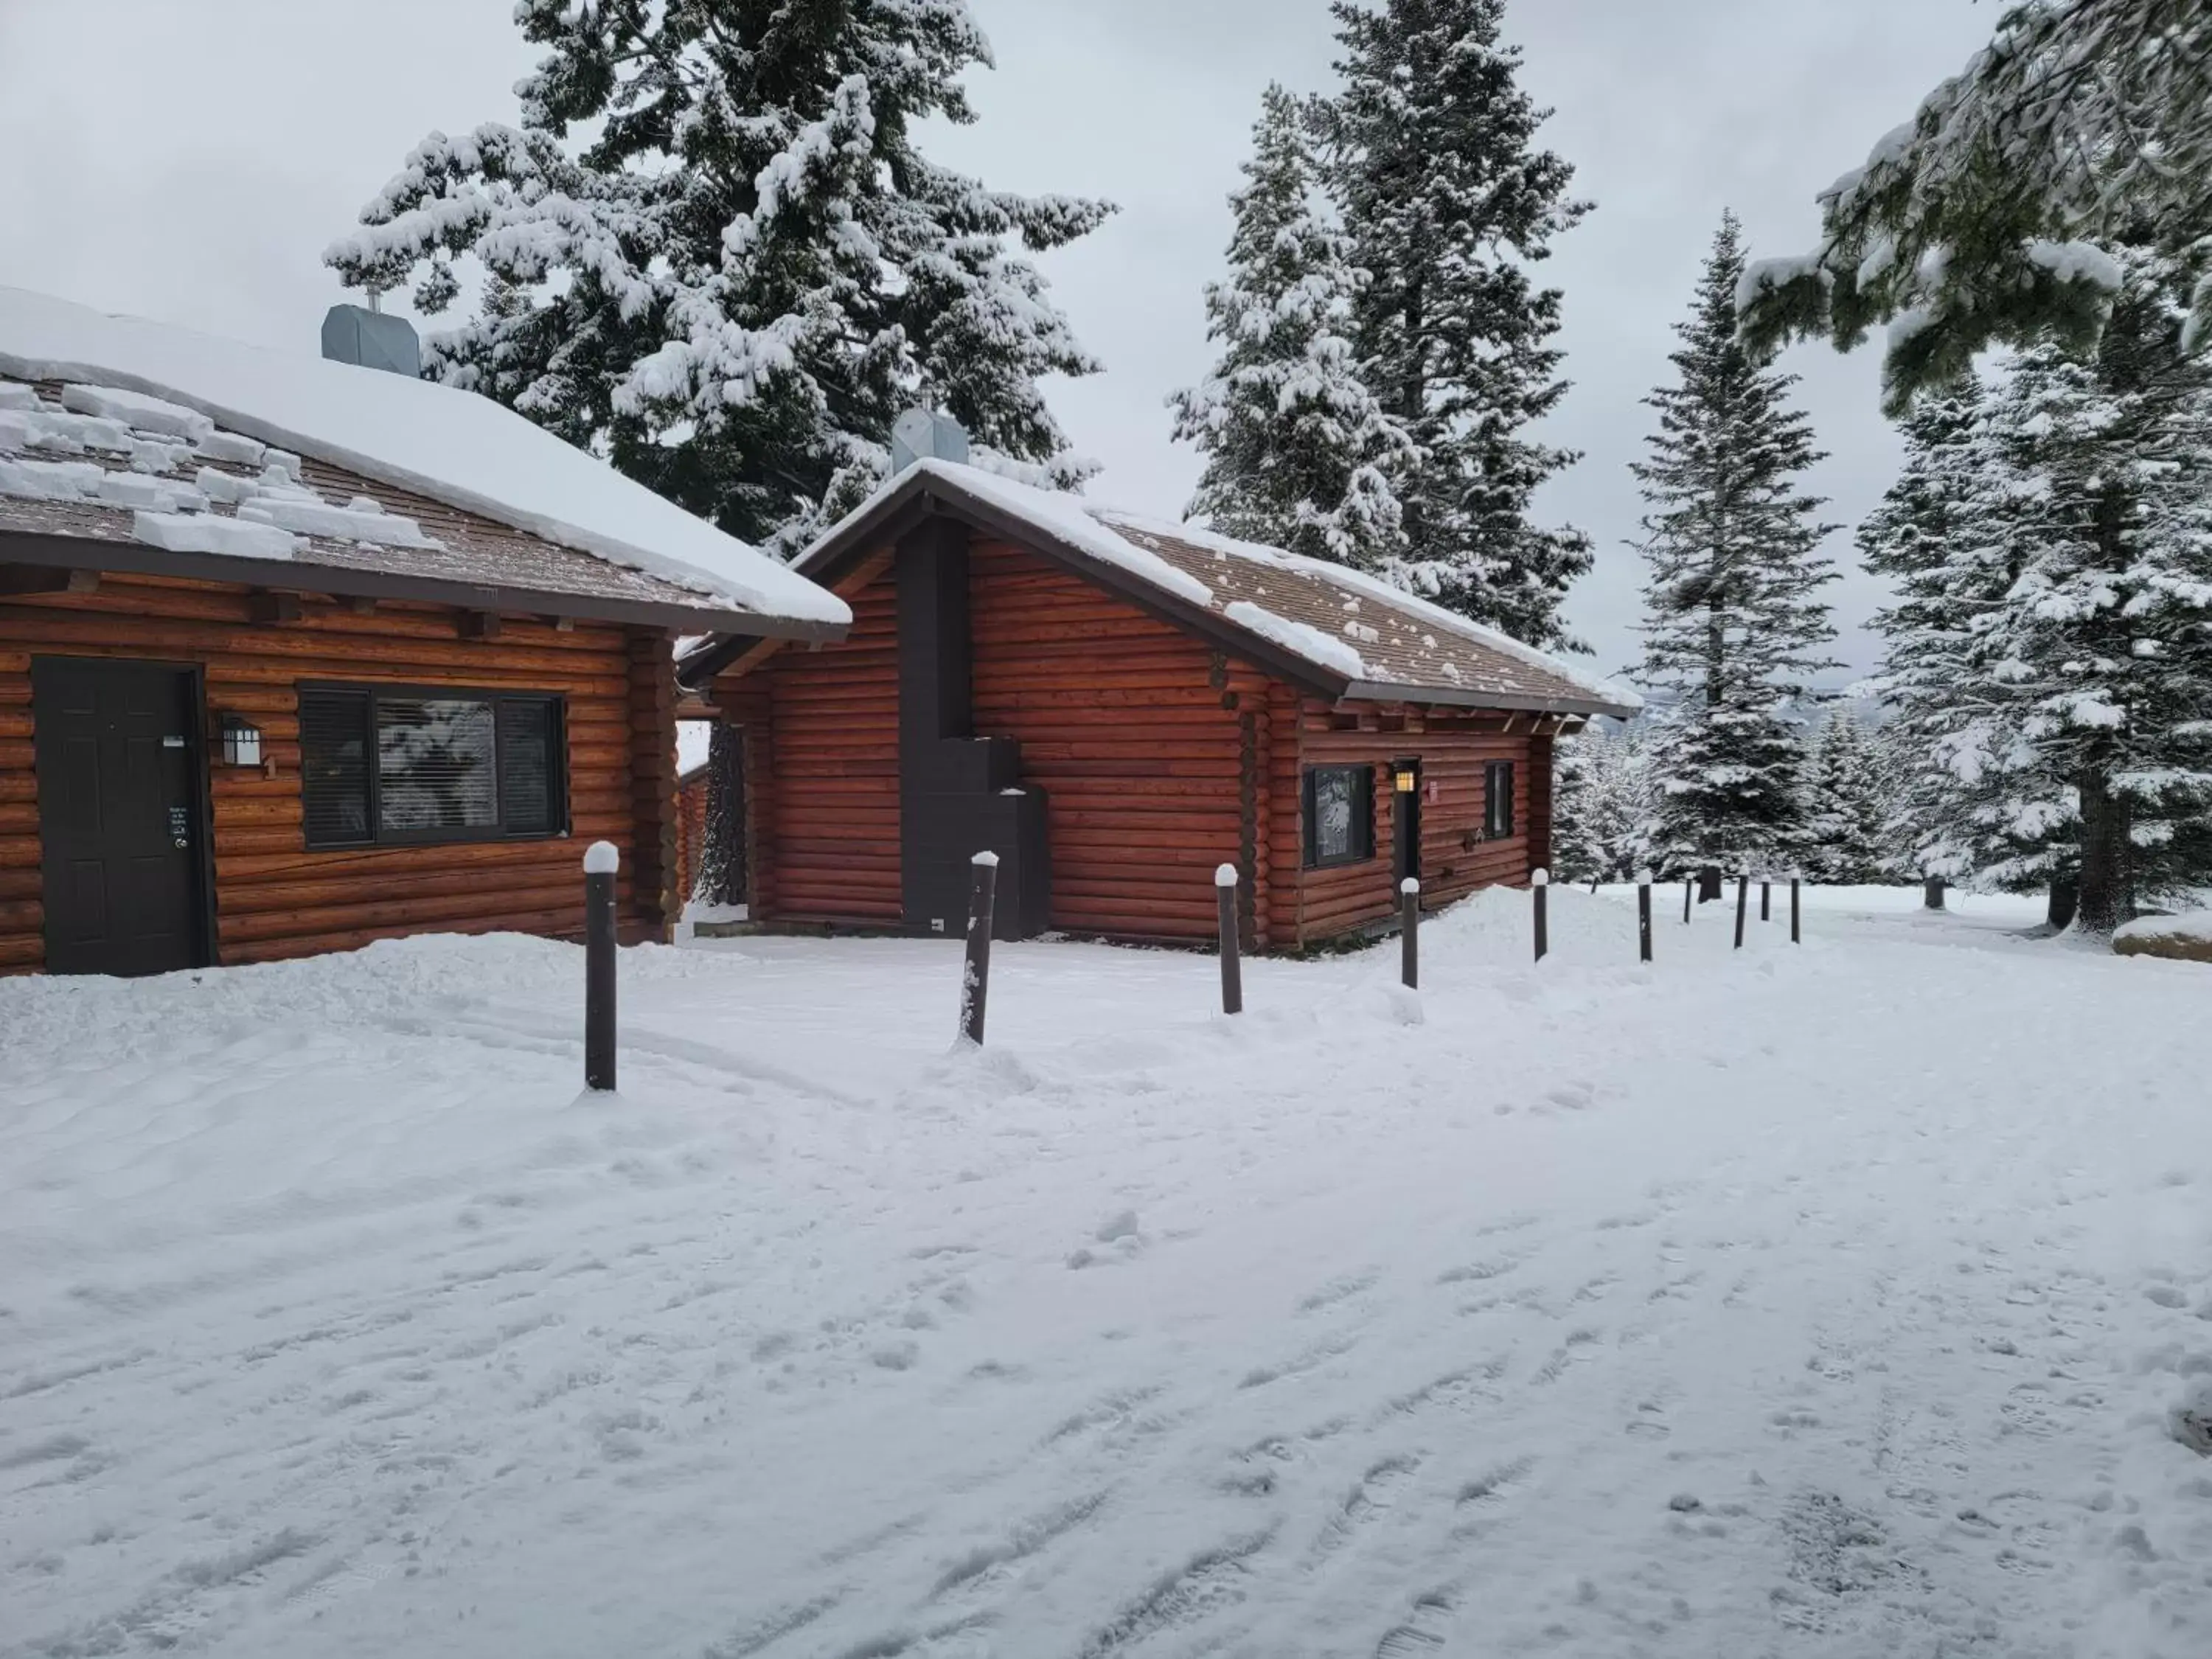 Property building, Winter in Cooper Spur Mountain Resort